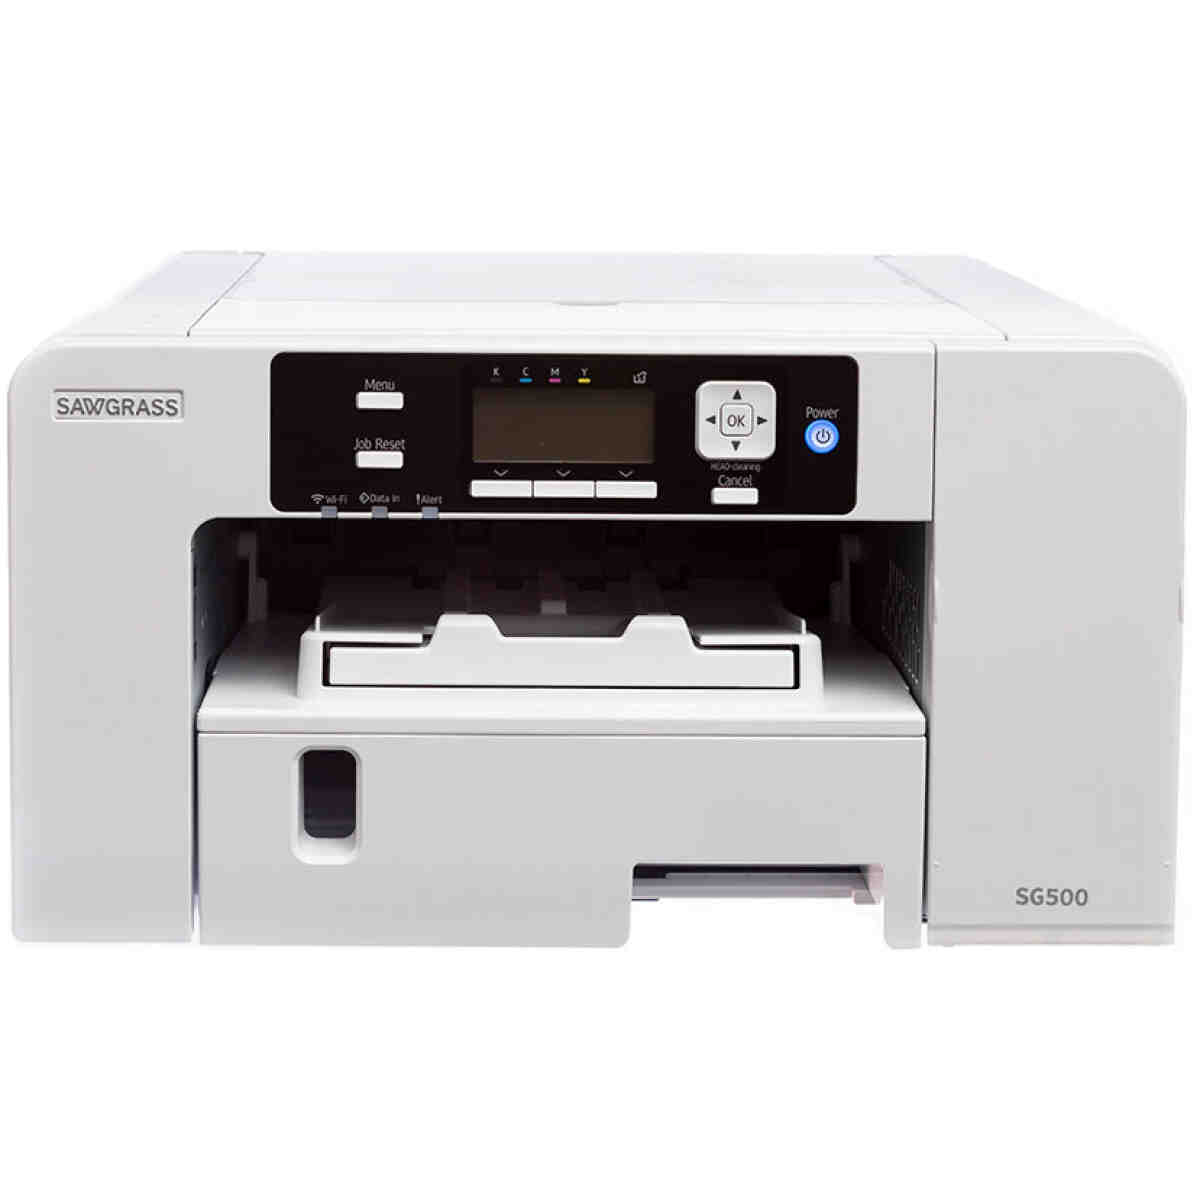 Sawgrass Sg500 Sublimation Printer SAWGRASS®